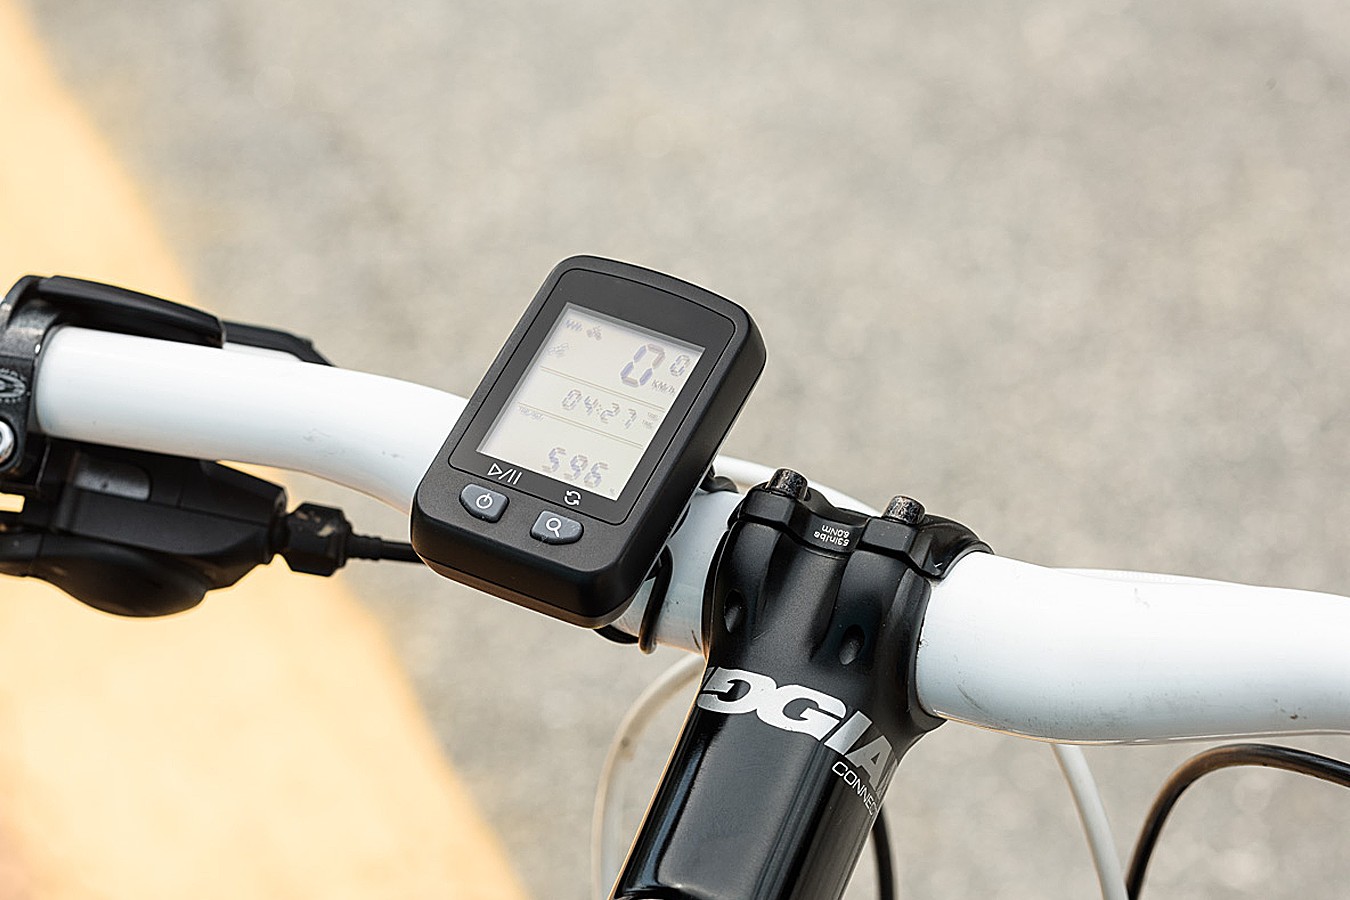 Velocímetro Bike Digital Iron Com GPS BI091 - Atrio